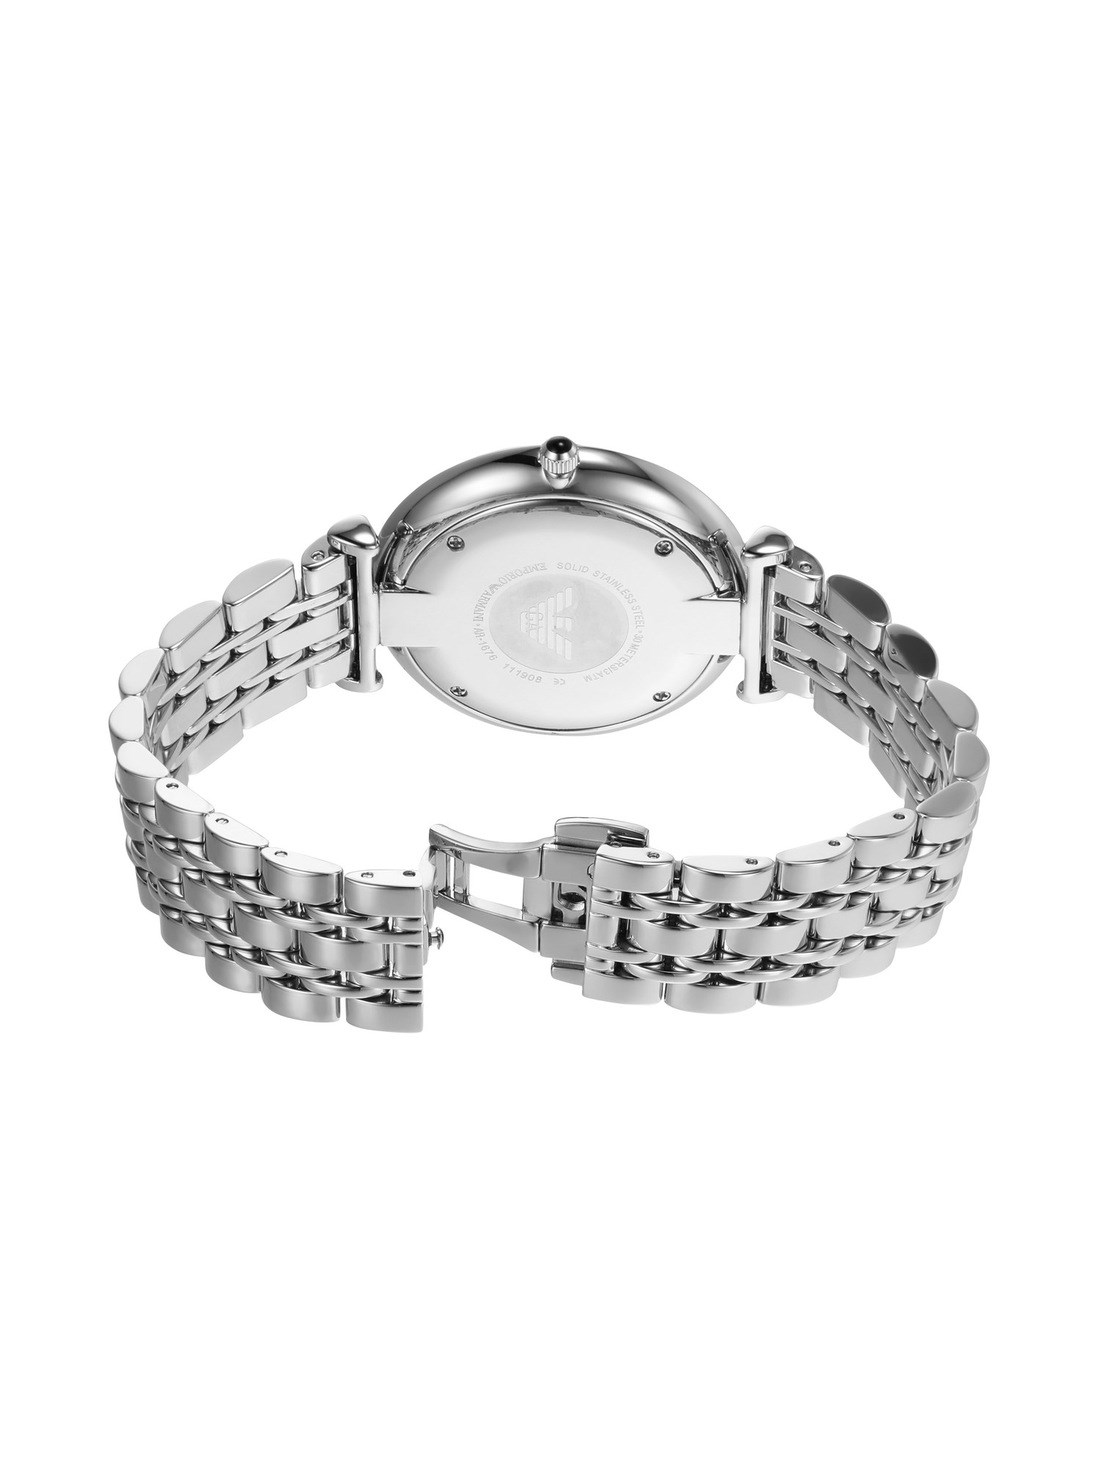 Emporio Armani Silver Watch AR1676 - Watch Station India